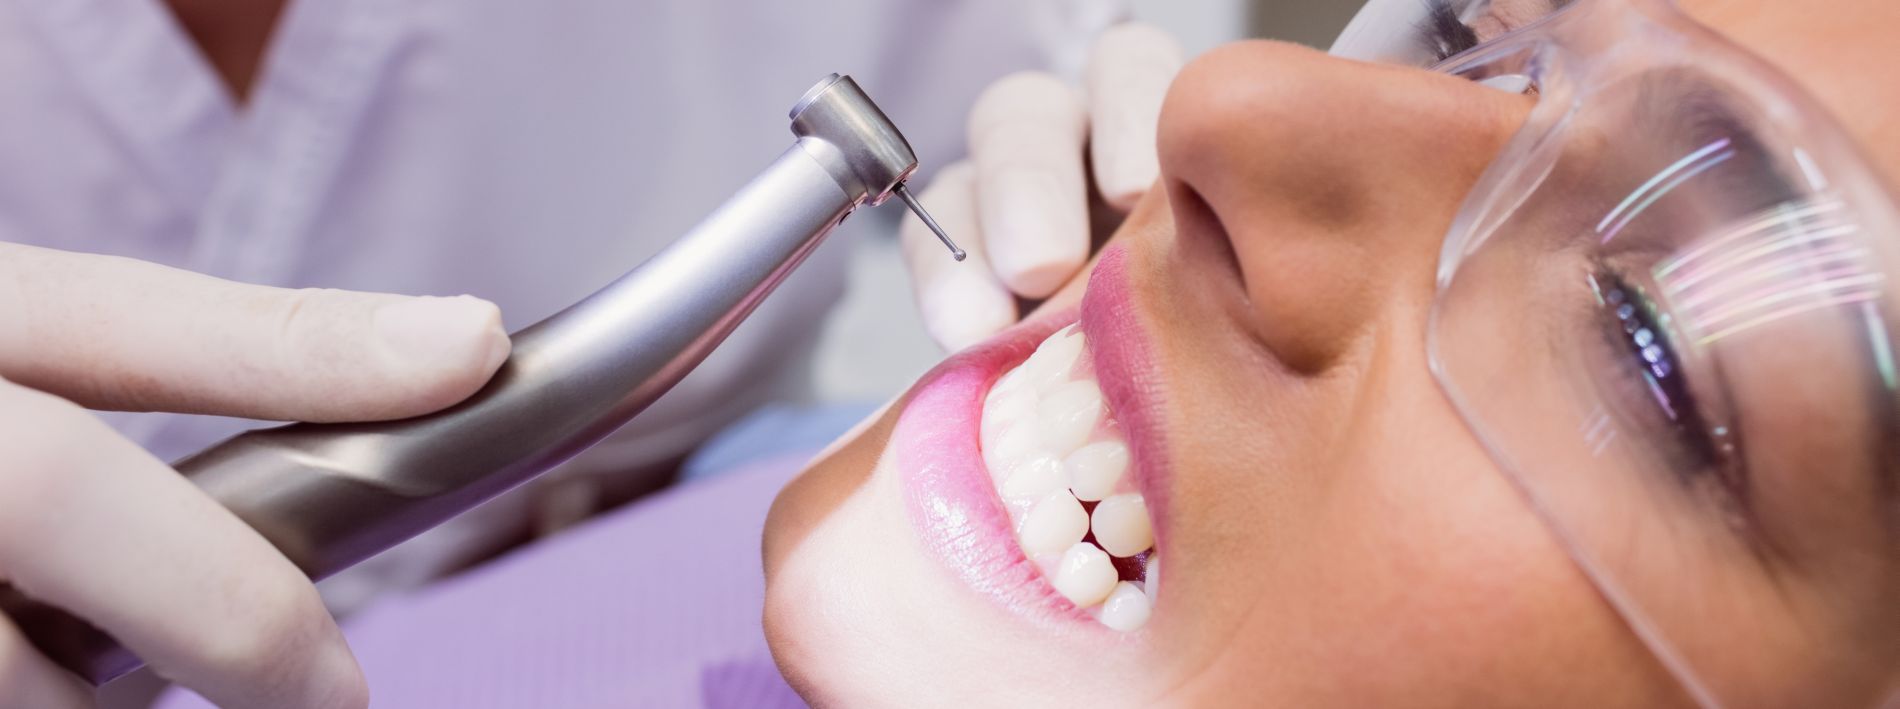 Periodoncia Clinica Dental Oralvant Ibague Colombia